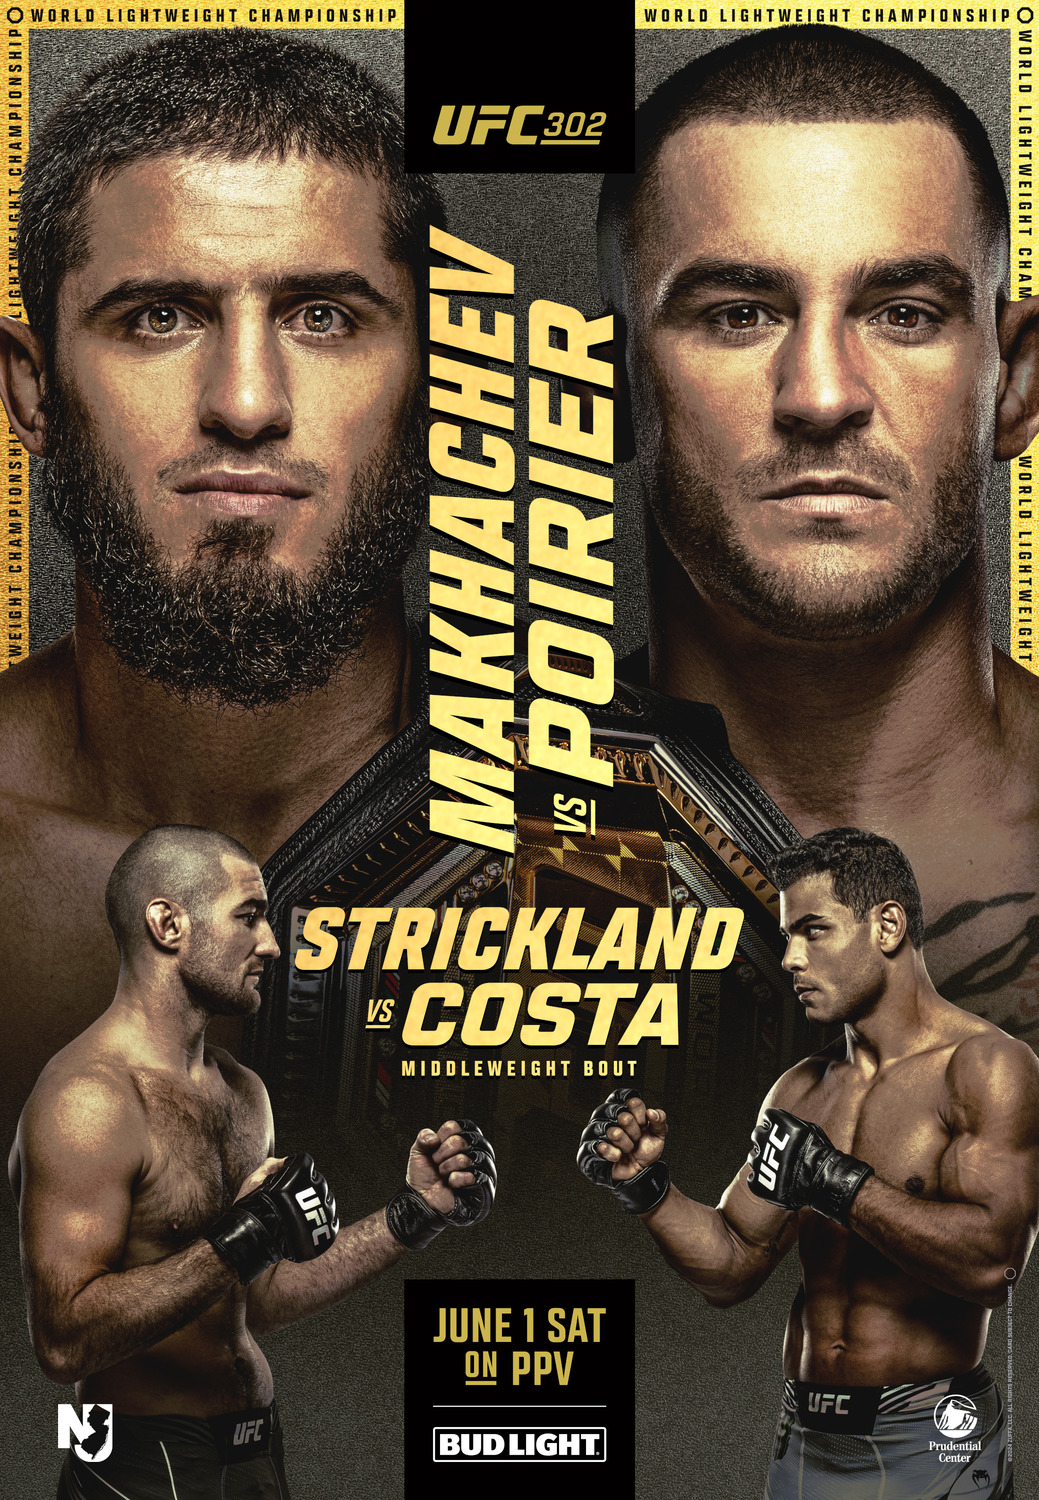 Extra Large TV Poster Image for UFC 302: Makhachev vs. Poirier 